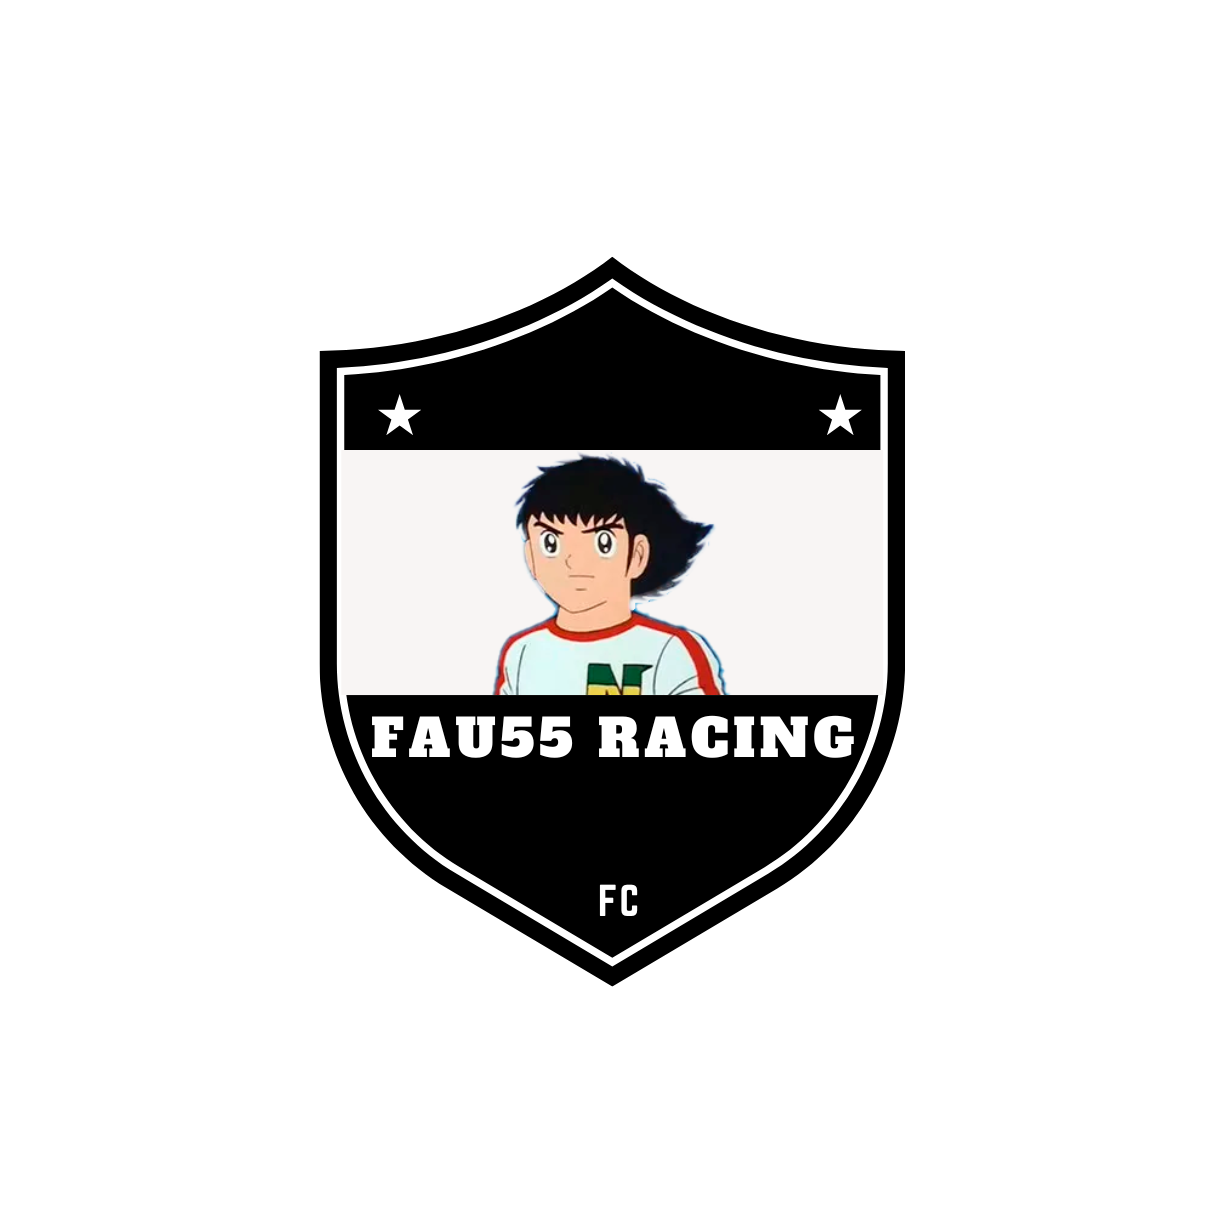 fau55 racing